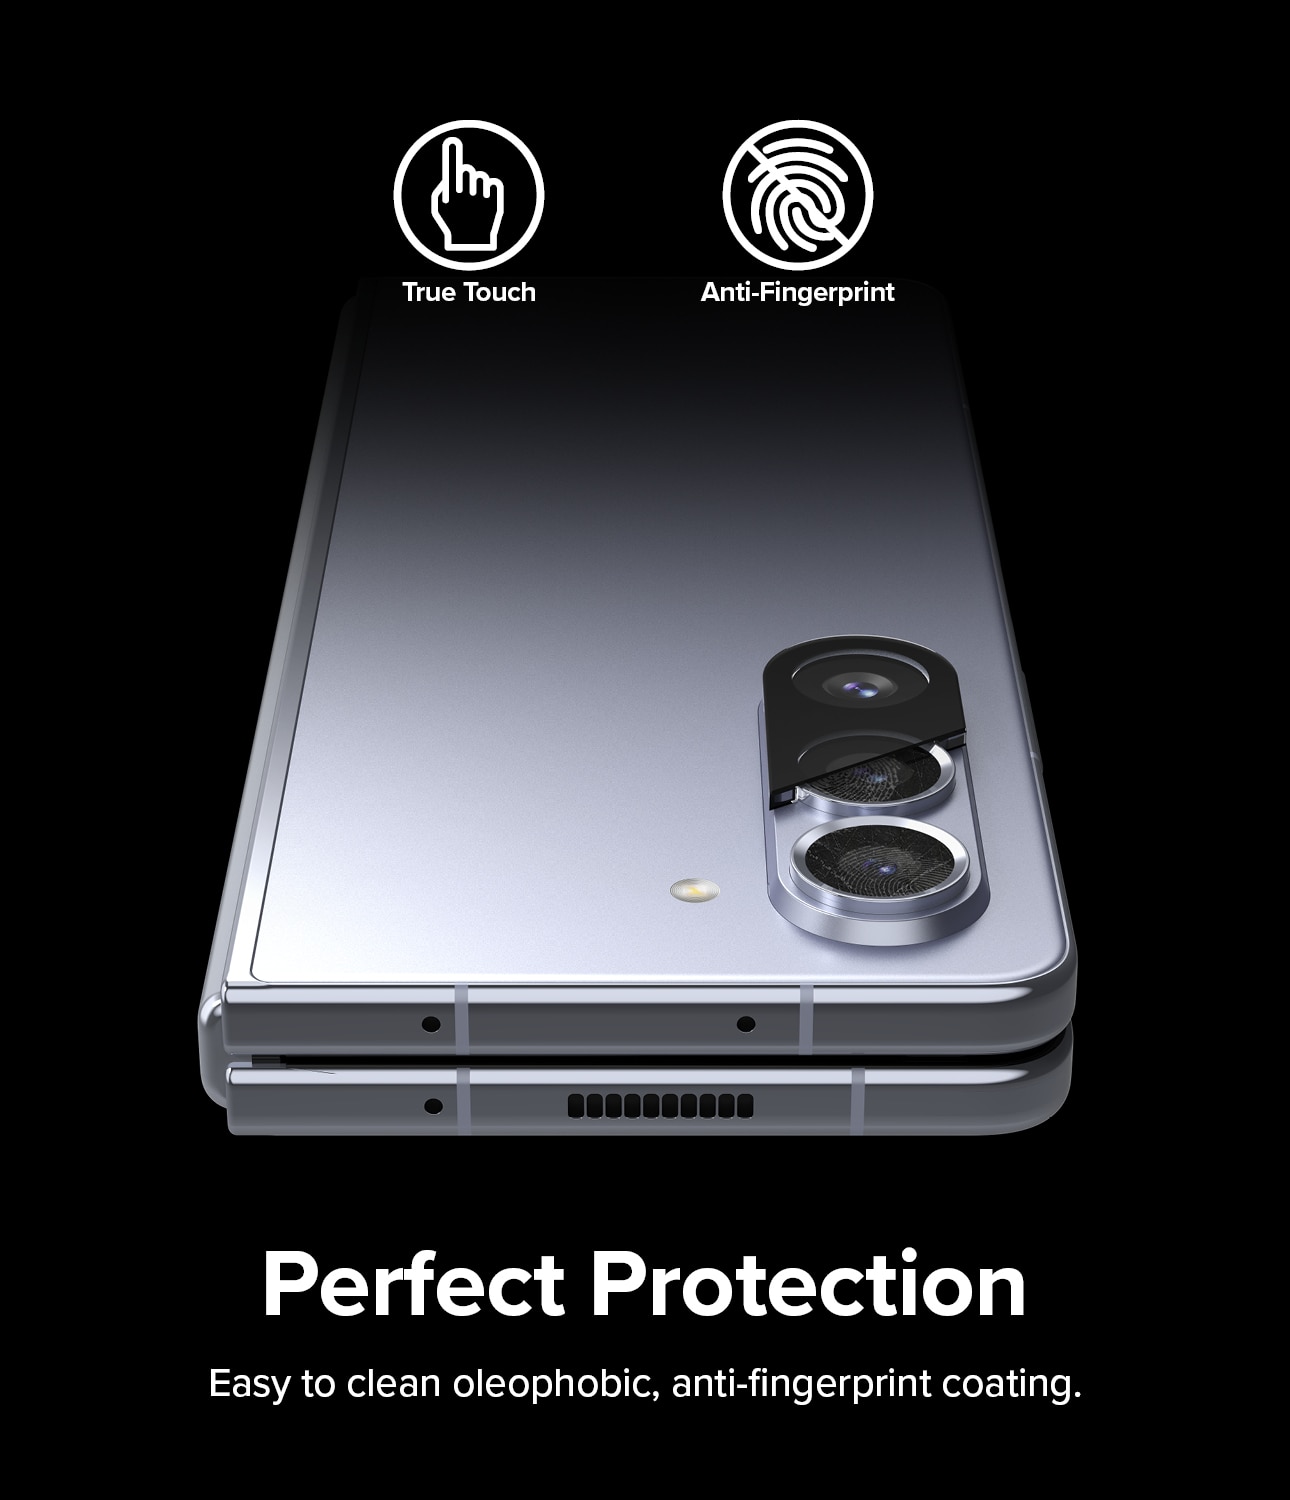 Camera Protector Glass (2 pezzi) Samsung Galaxy Z Fold 5 Trasparente